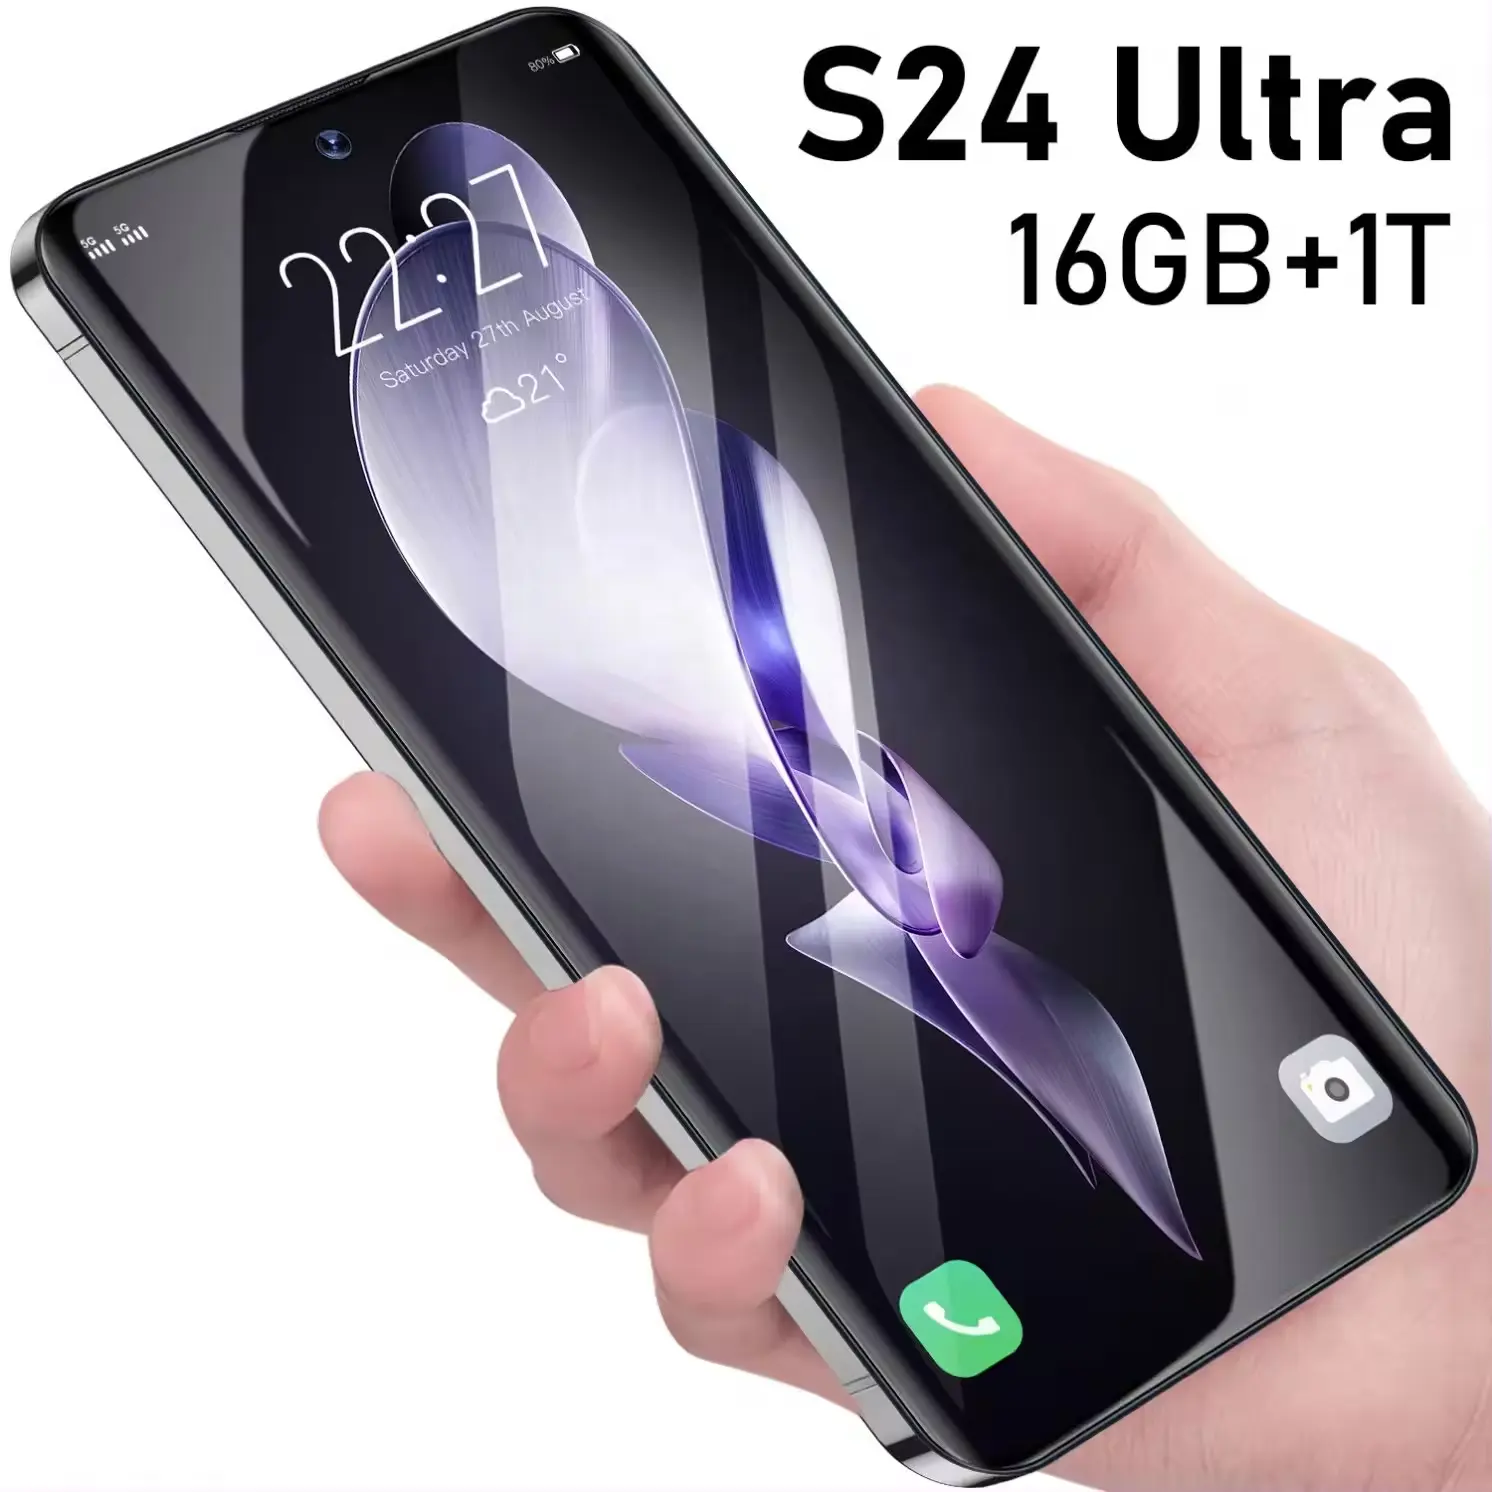 शक्तिशाली स्टाइलस स्मार्टफोन एंड्रॉइड 9 5जी मोबाइल के साथ नया संस्करण OEM मोबाइल फोन S24